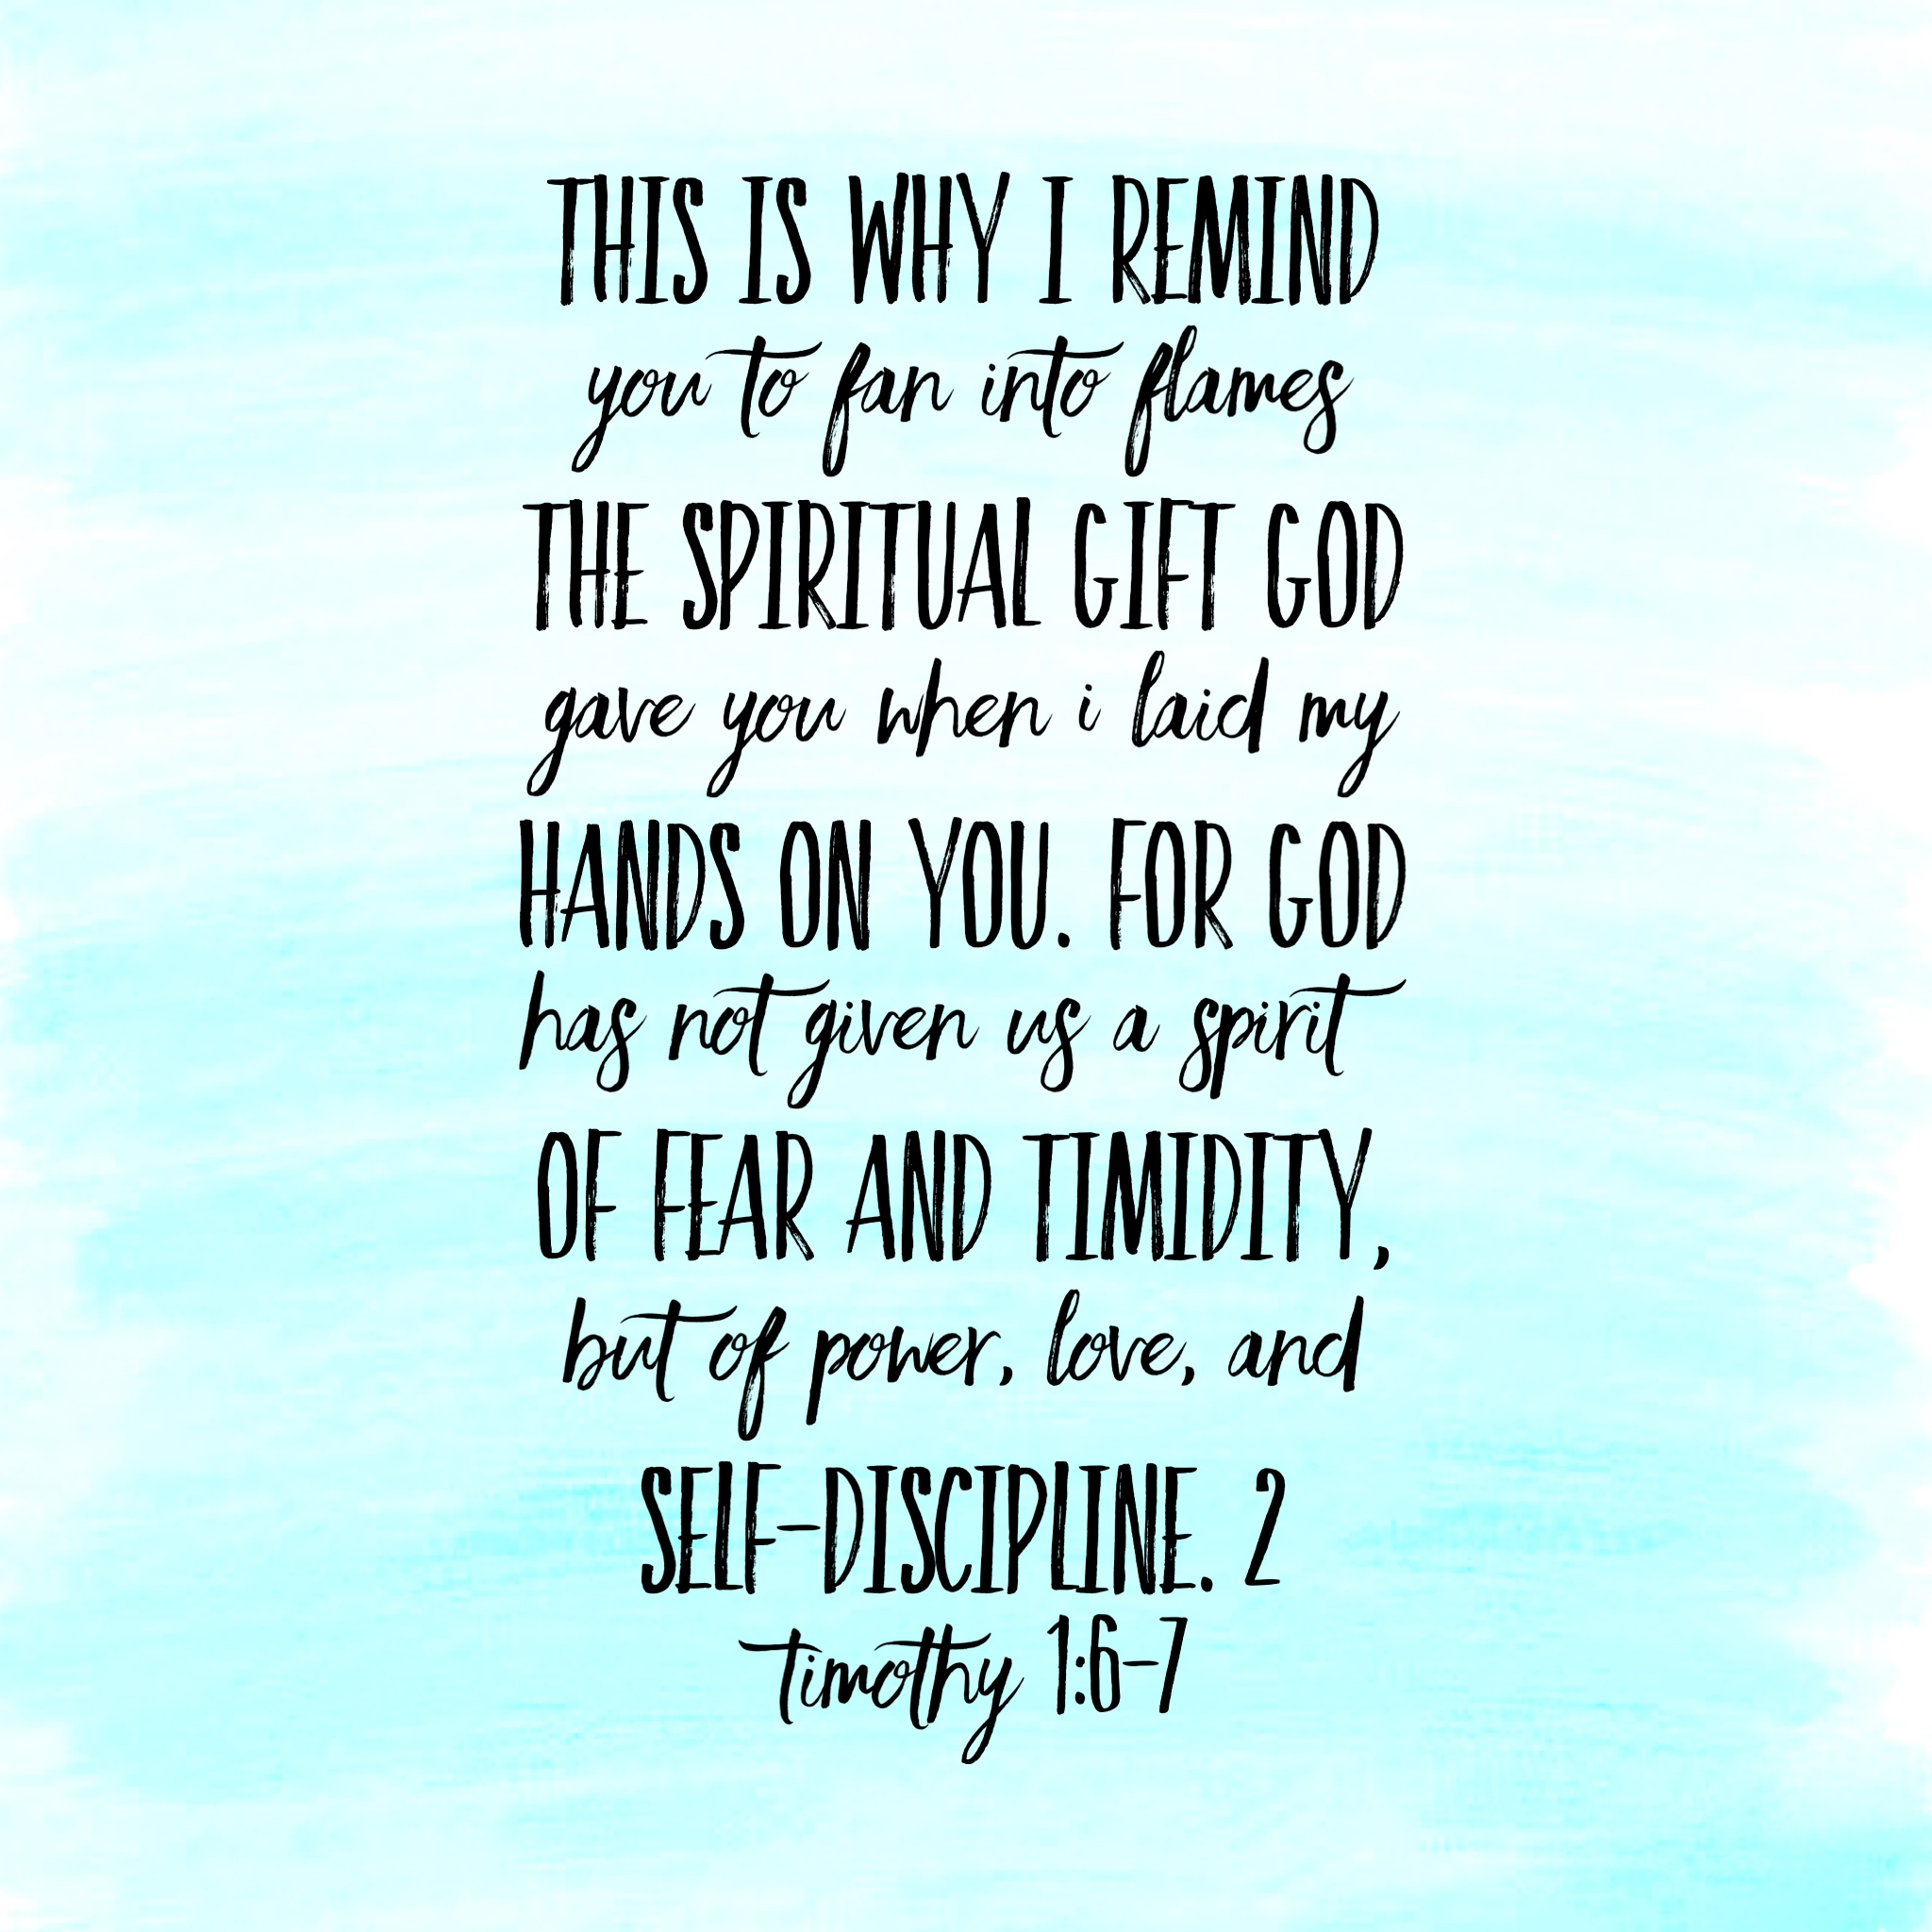  2 Timothy 1:6-7 